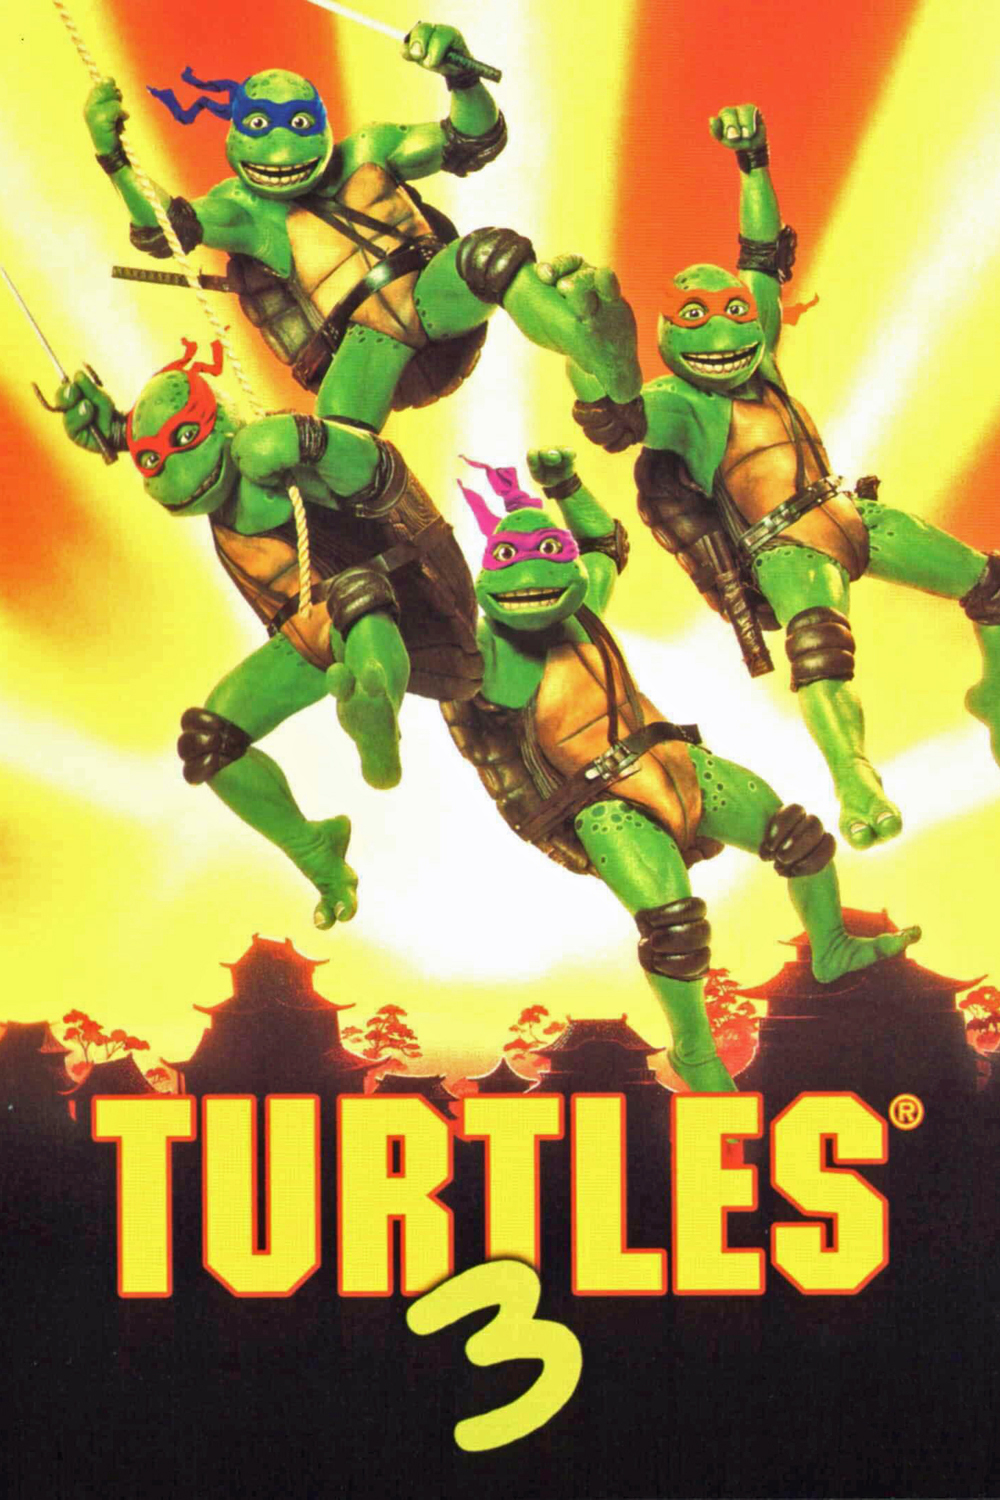 Plakat von "Turtles III"